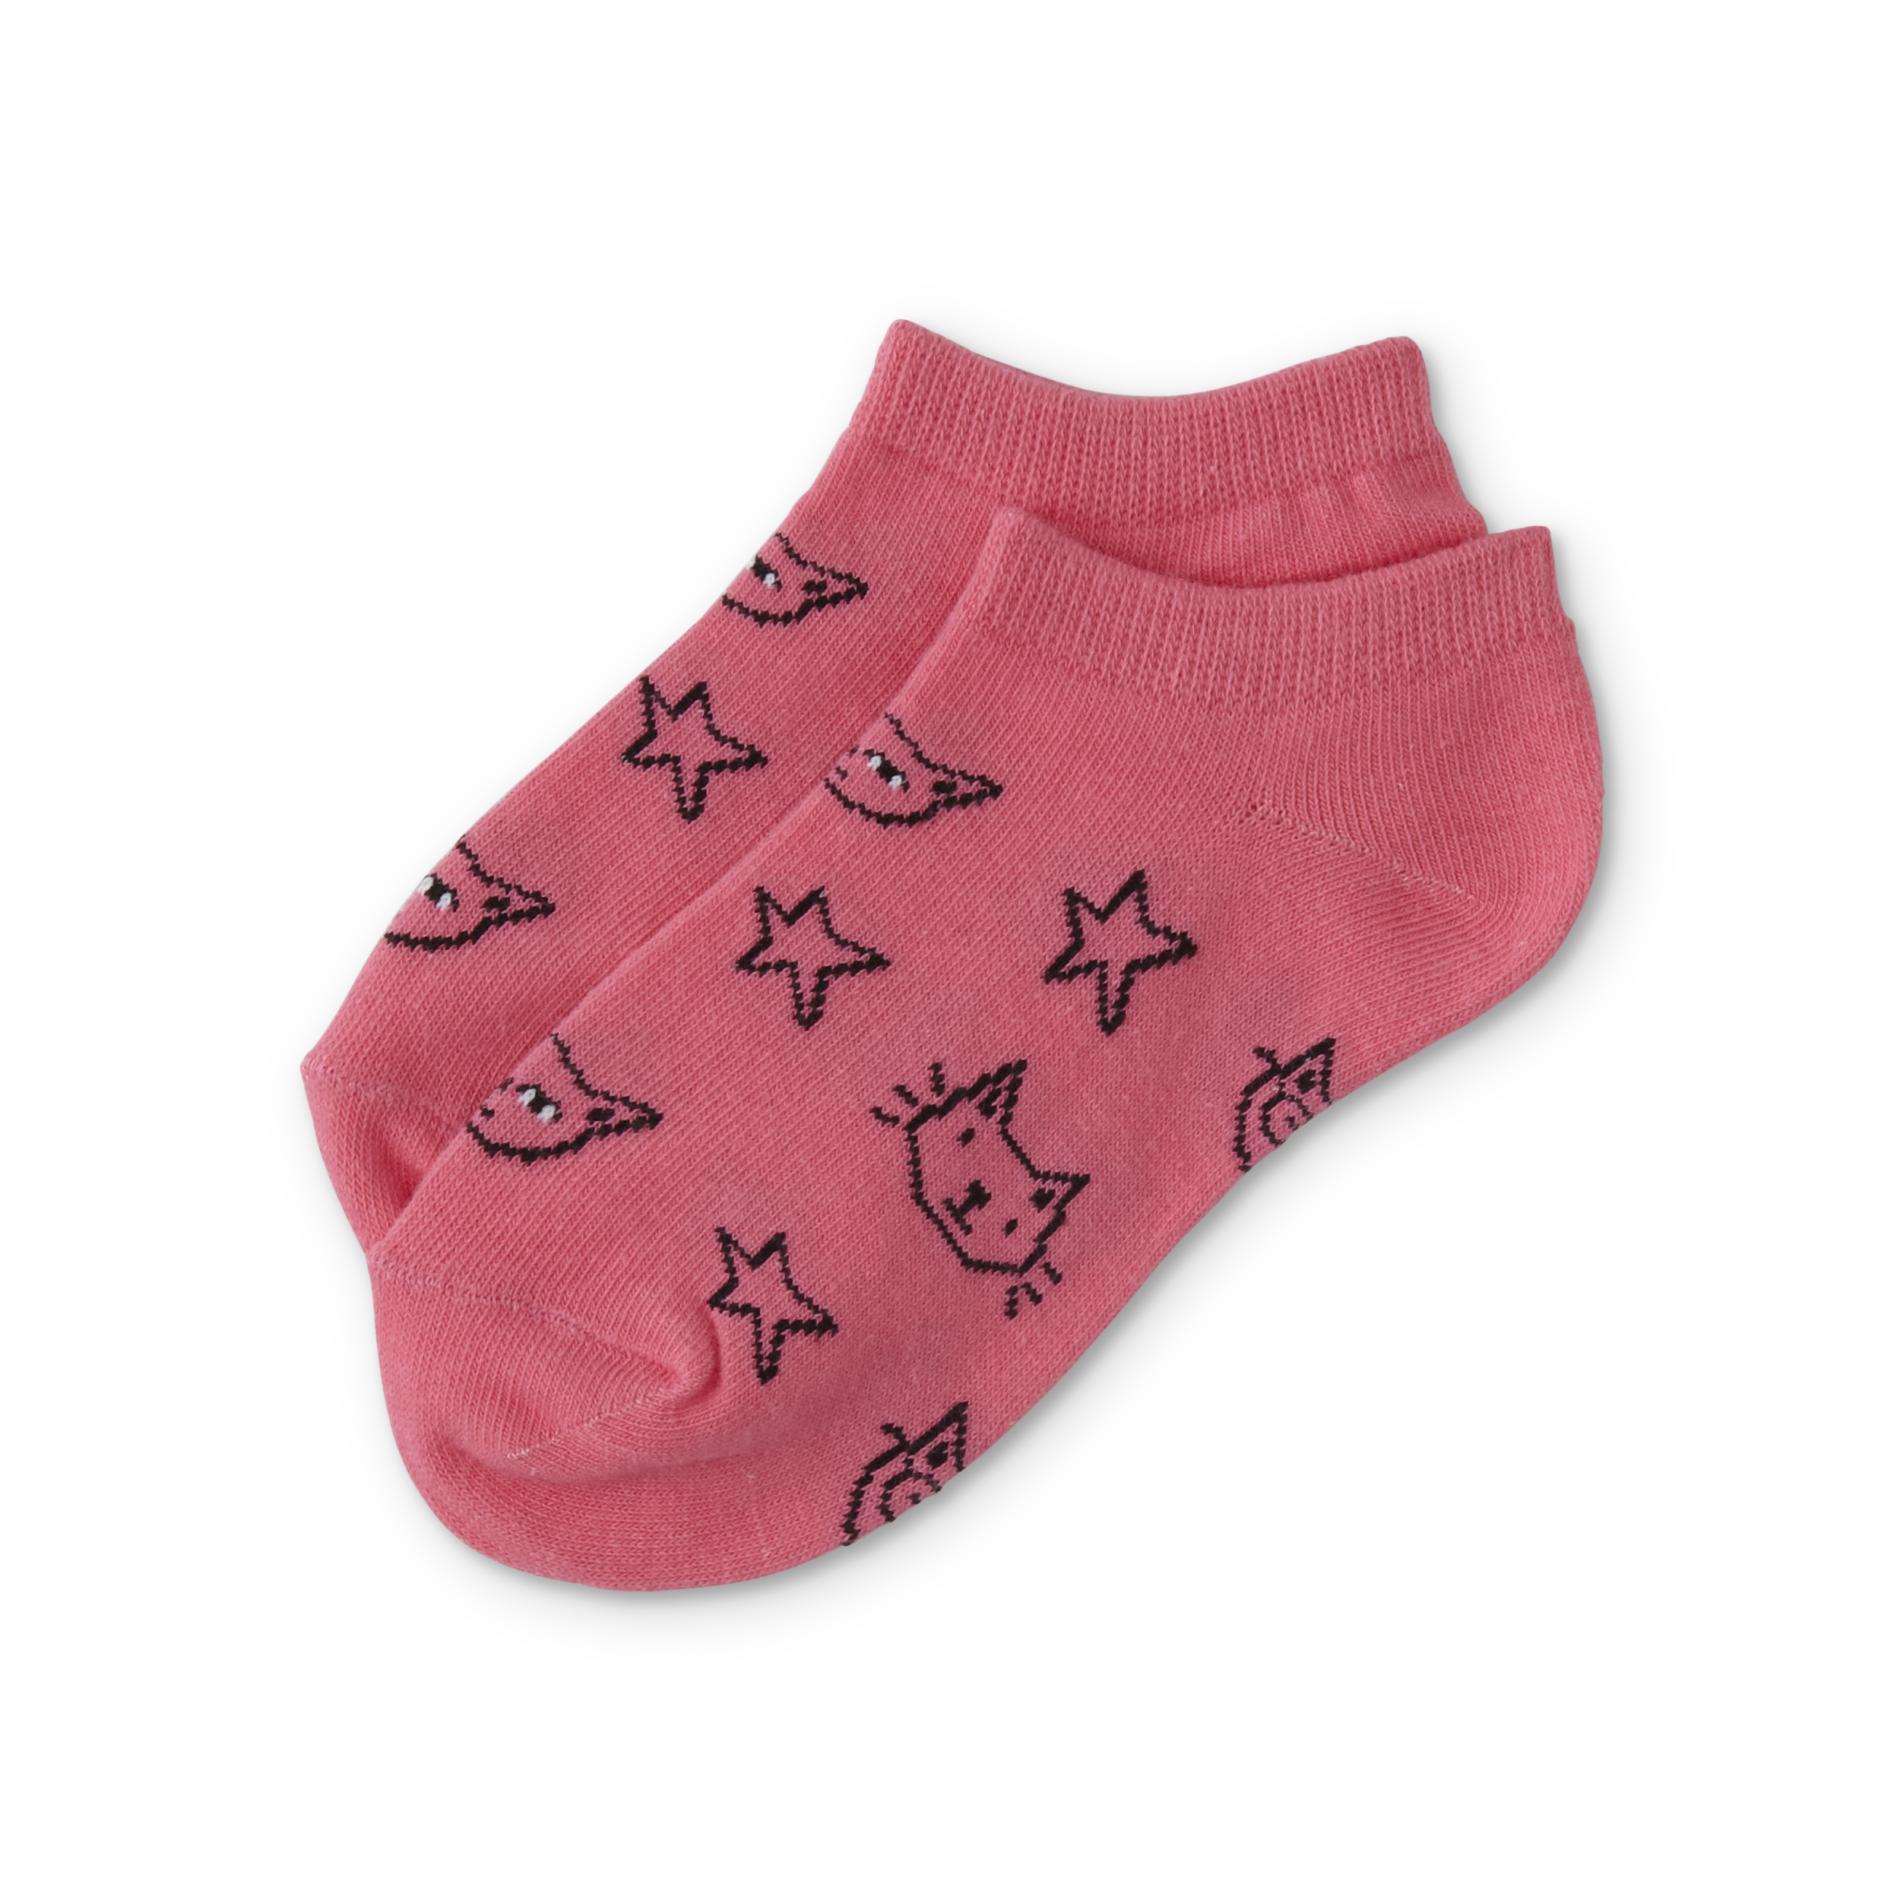 Joe Boxer Girls' Ankle Socks - Cats